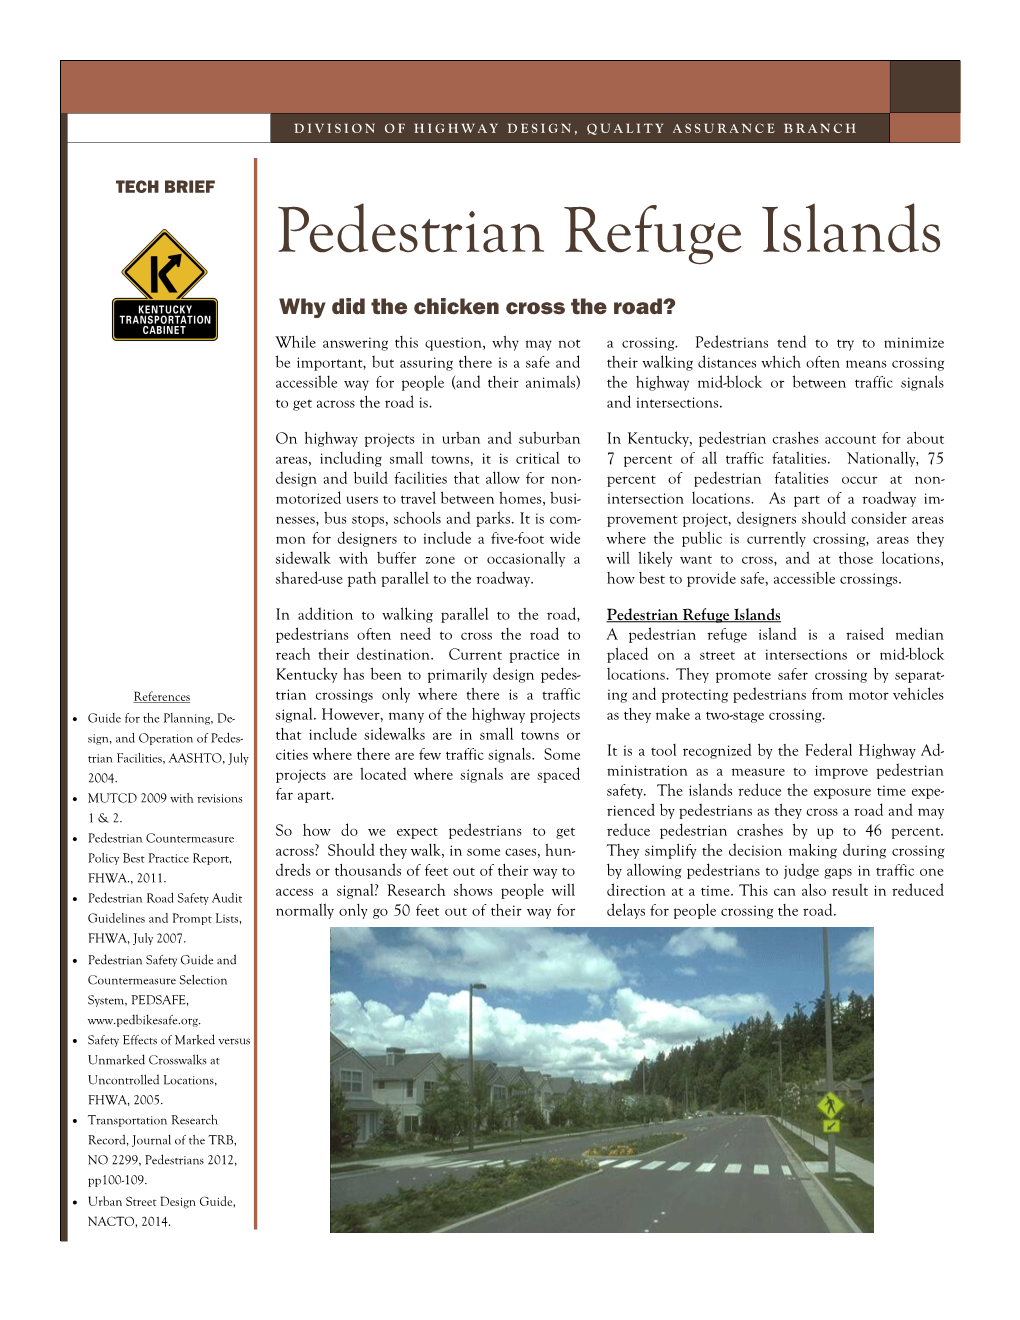 Pedestrian Refuge Islands